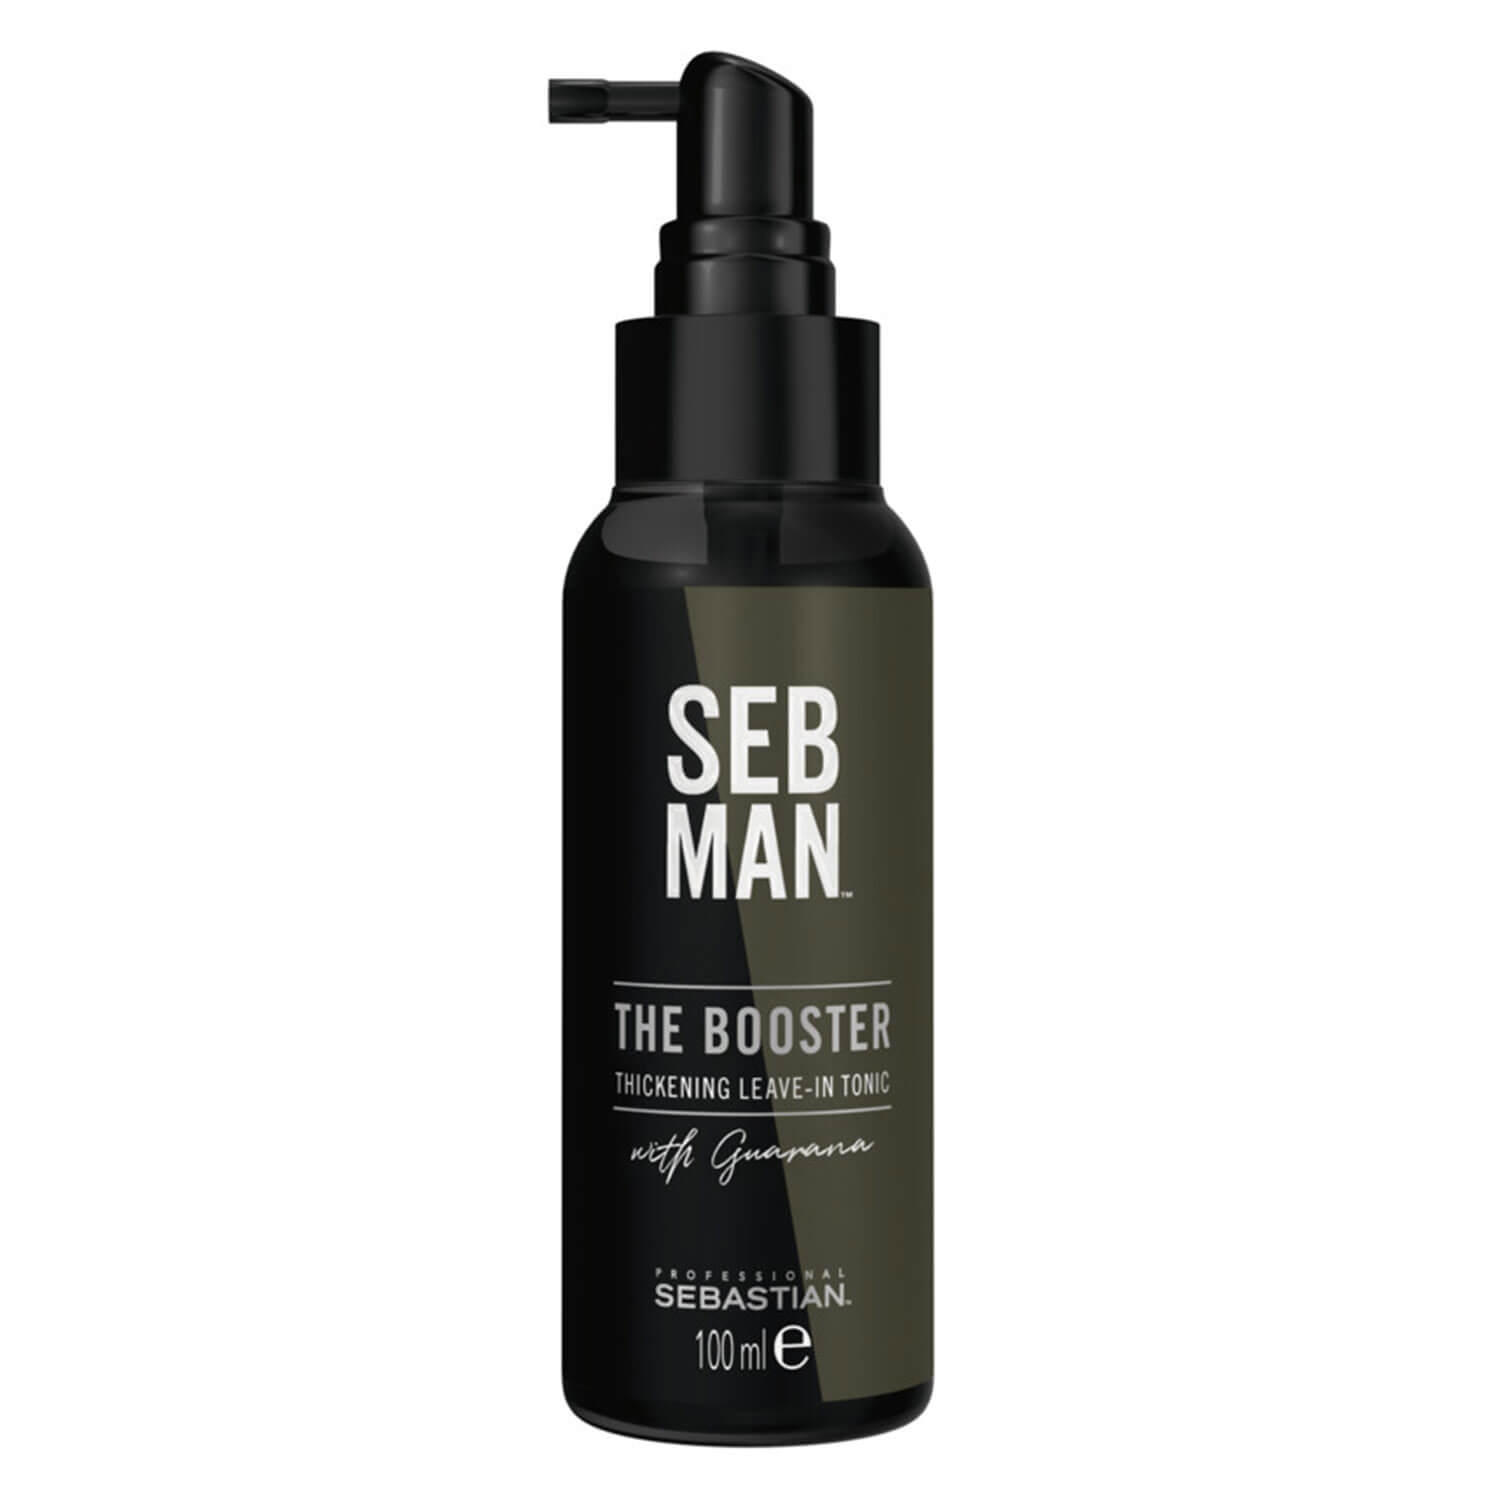 Produktbild von SEB MAN - The Booster Thickening Leave-in Tonic